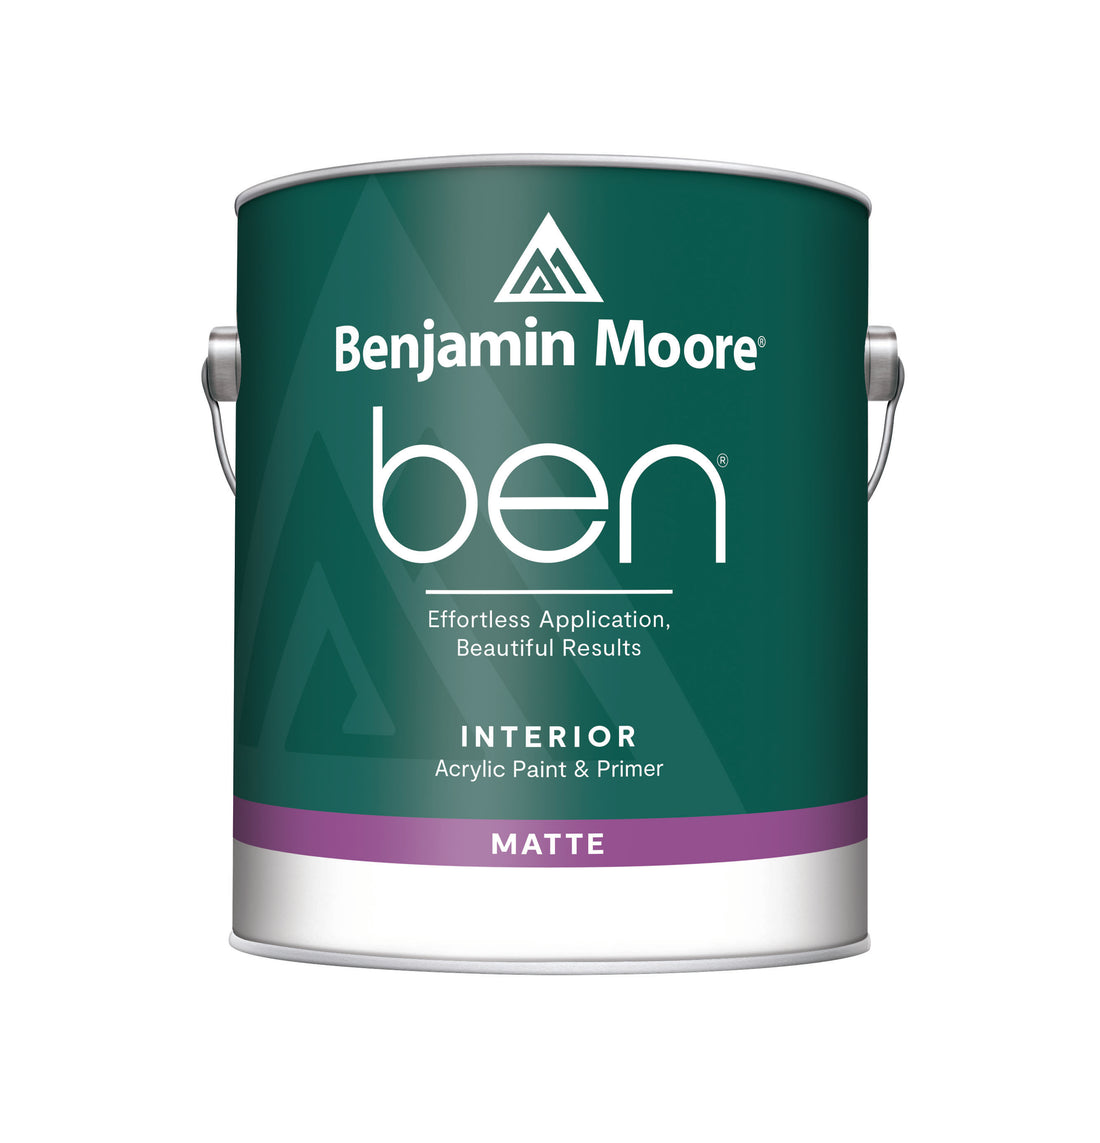 ben® Waterborne Interior Paint- Matte N624